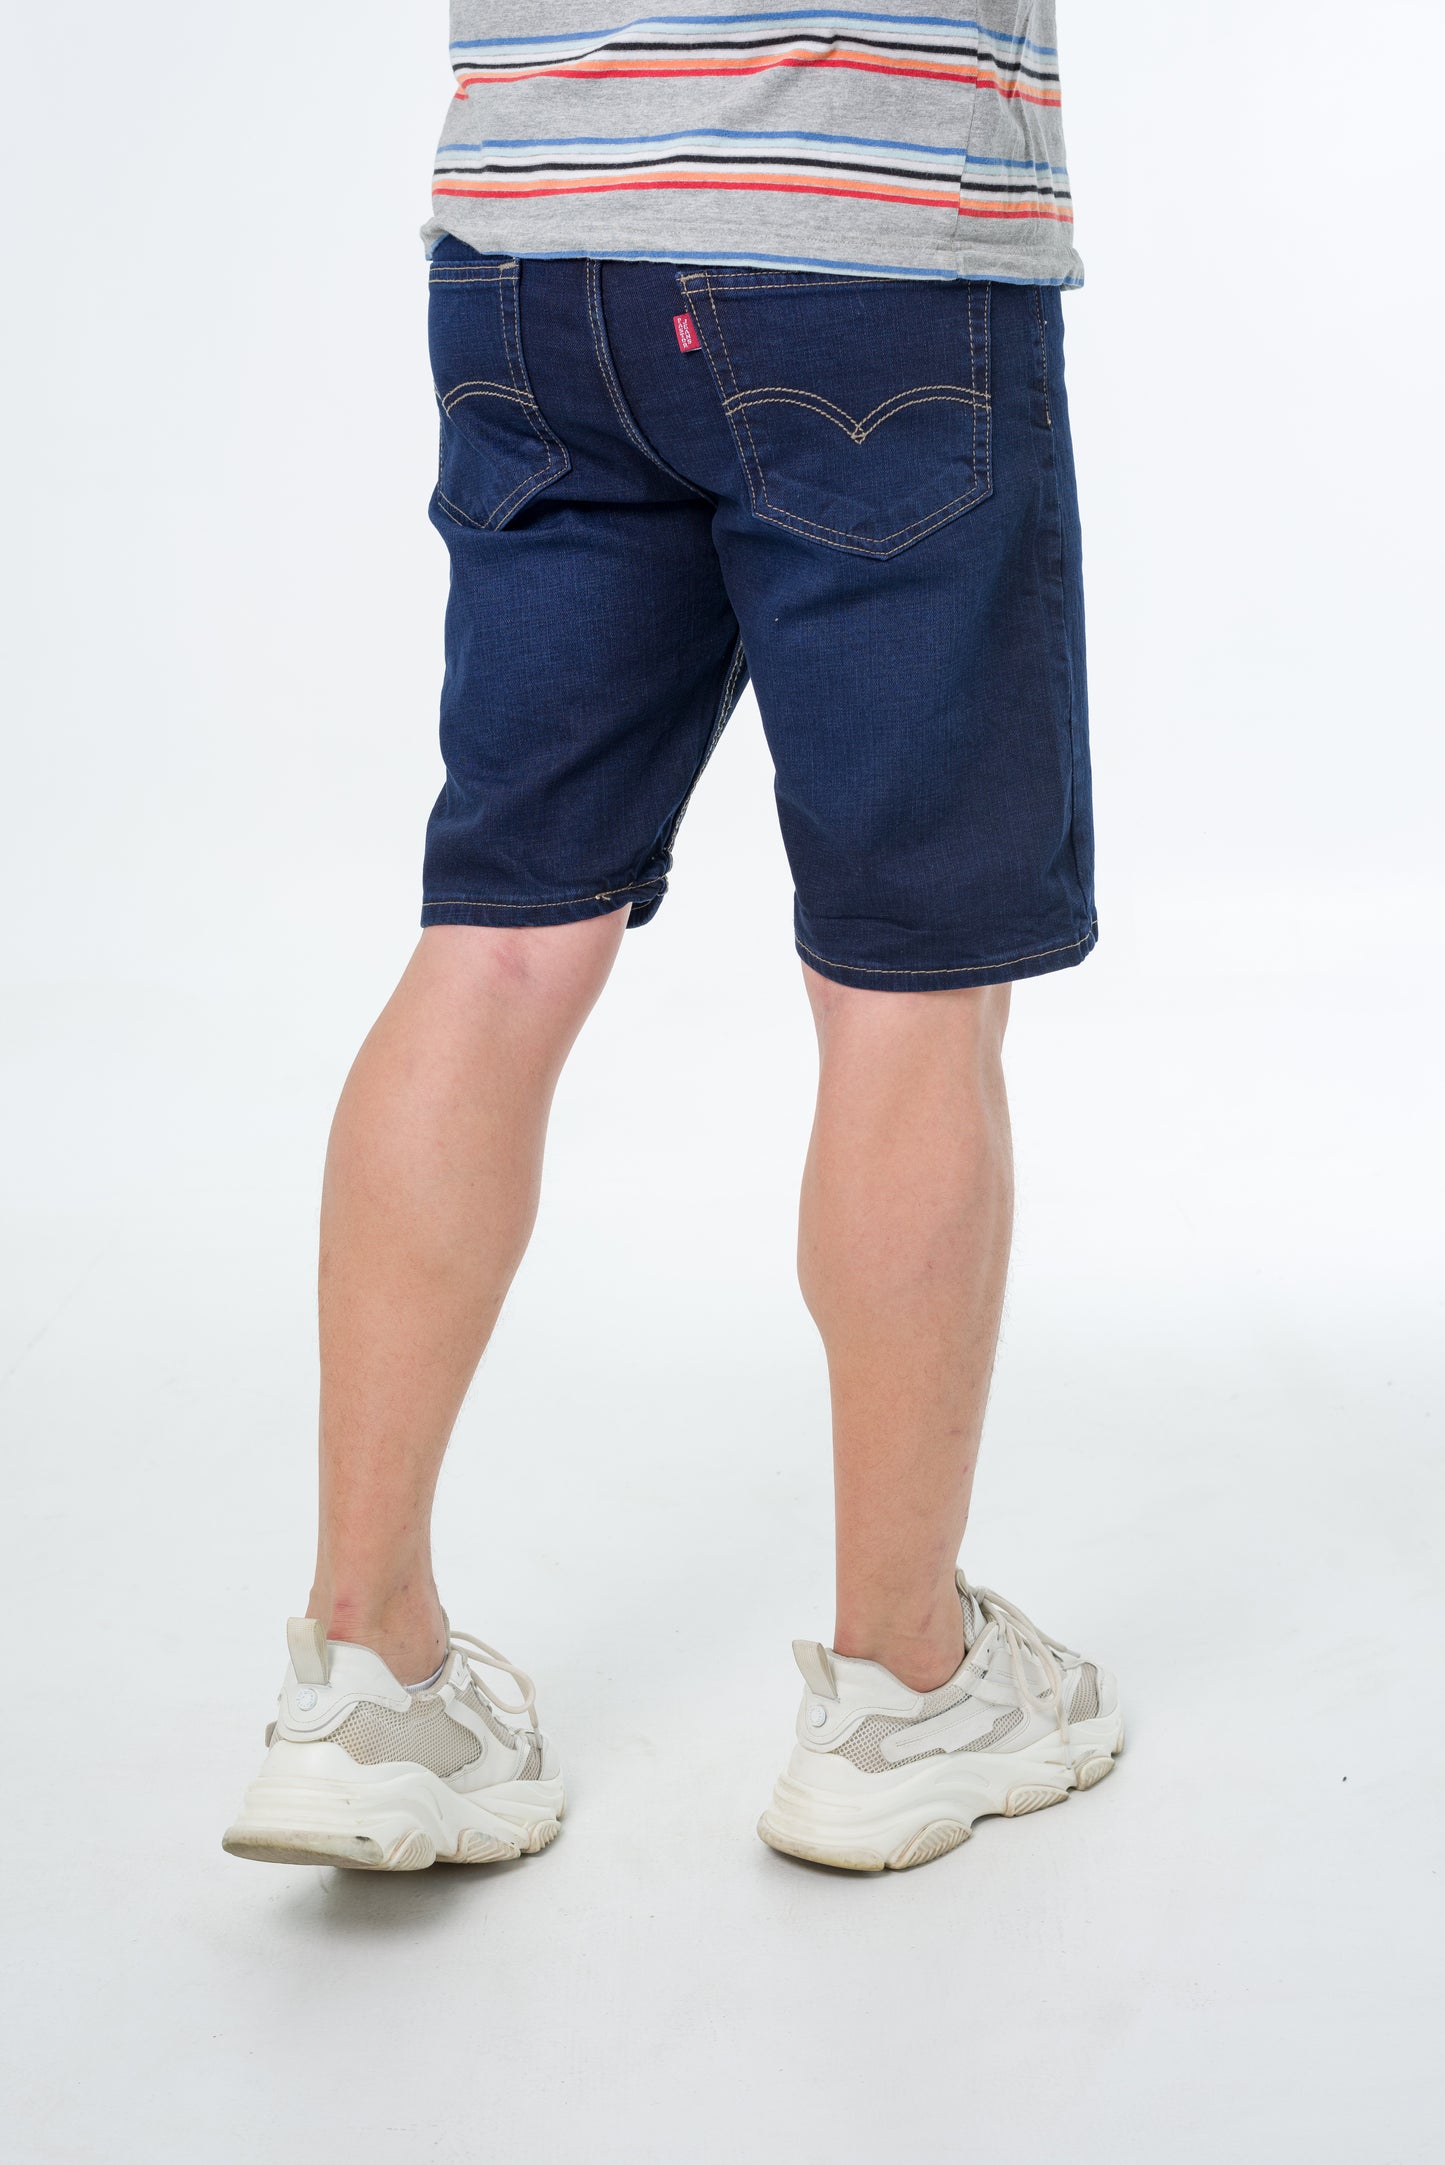 Pastor Jeans Shorts Regular